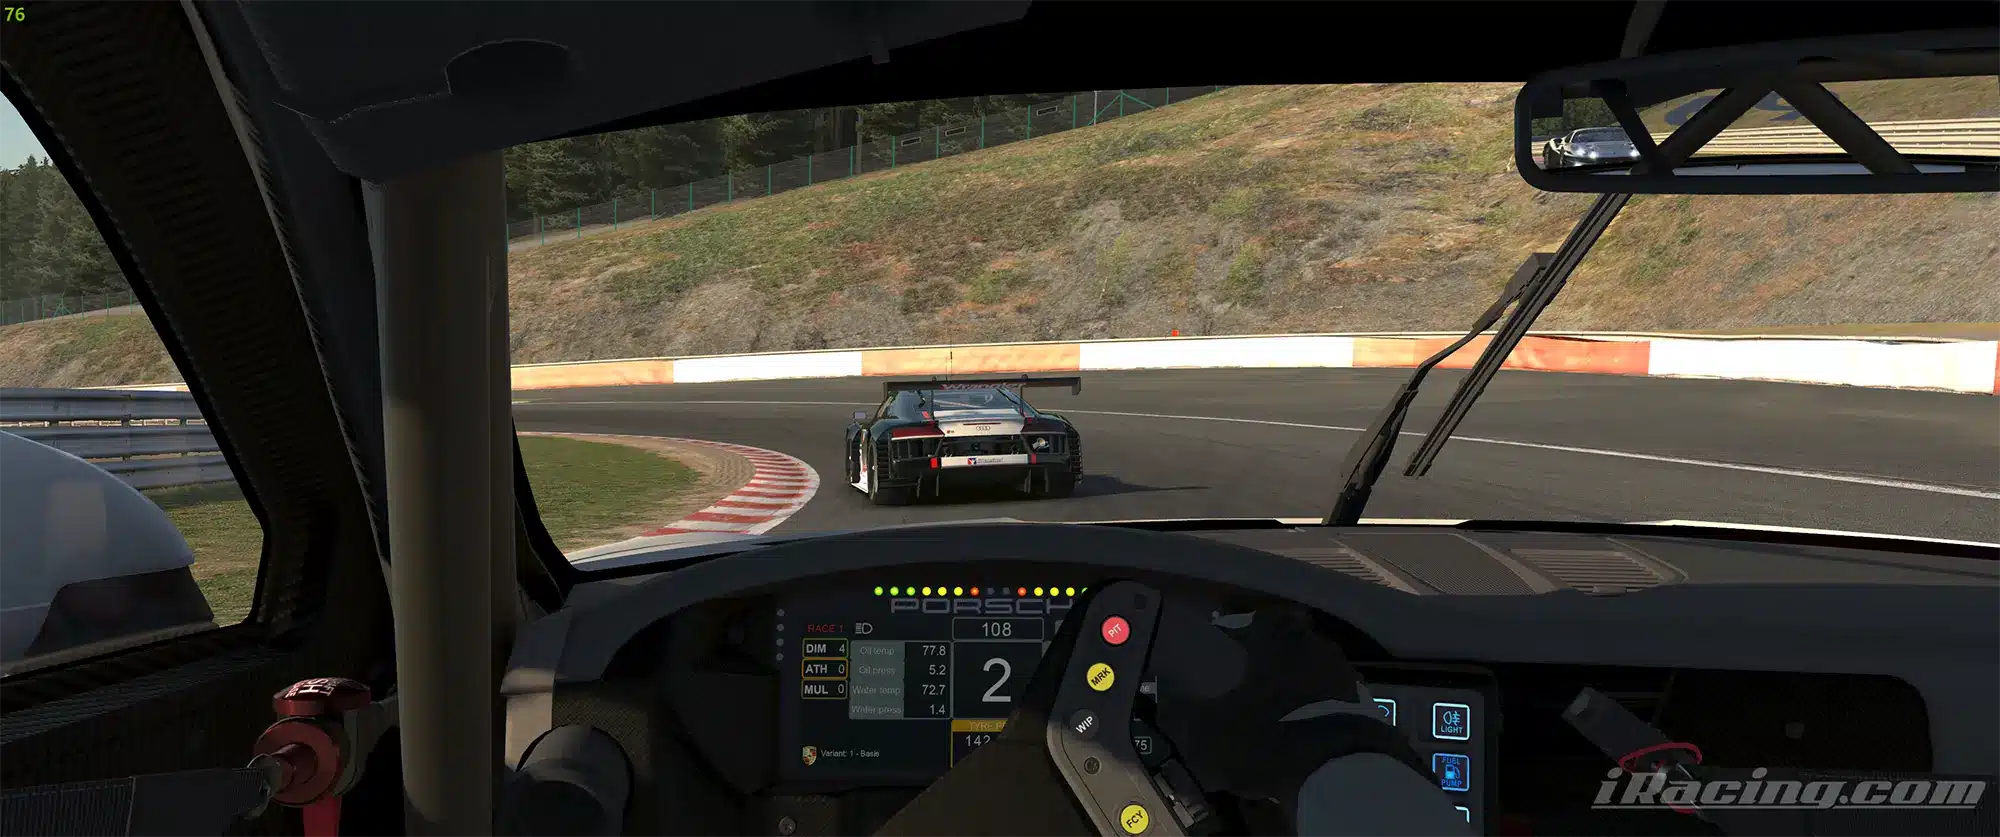 iRacing: Porsche 911 GT3 Cup (992) Cockpit View